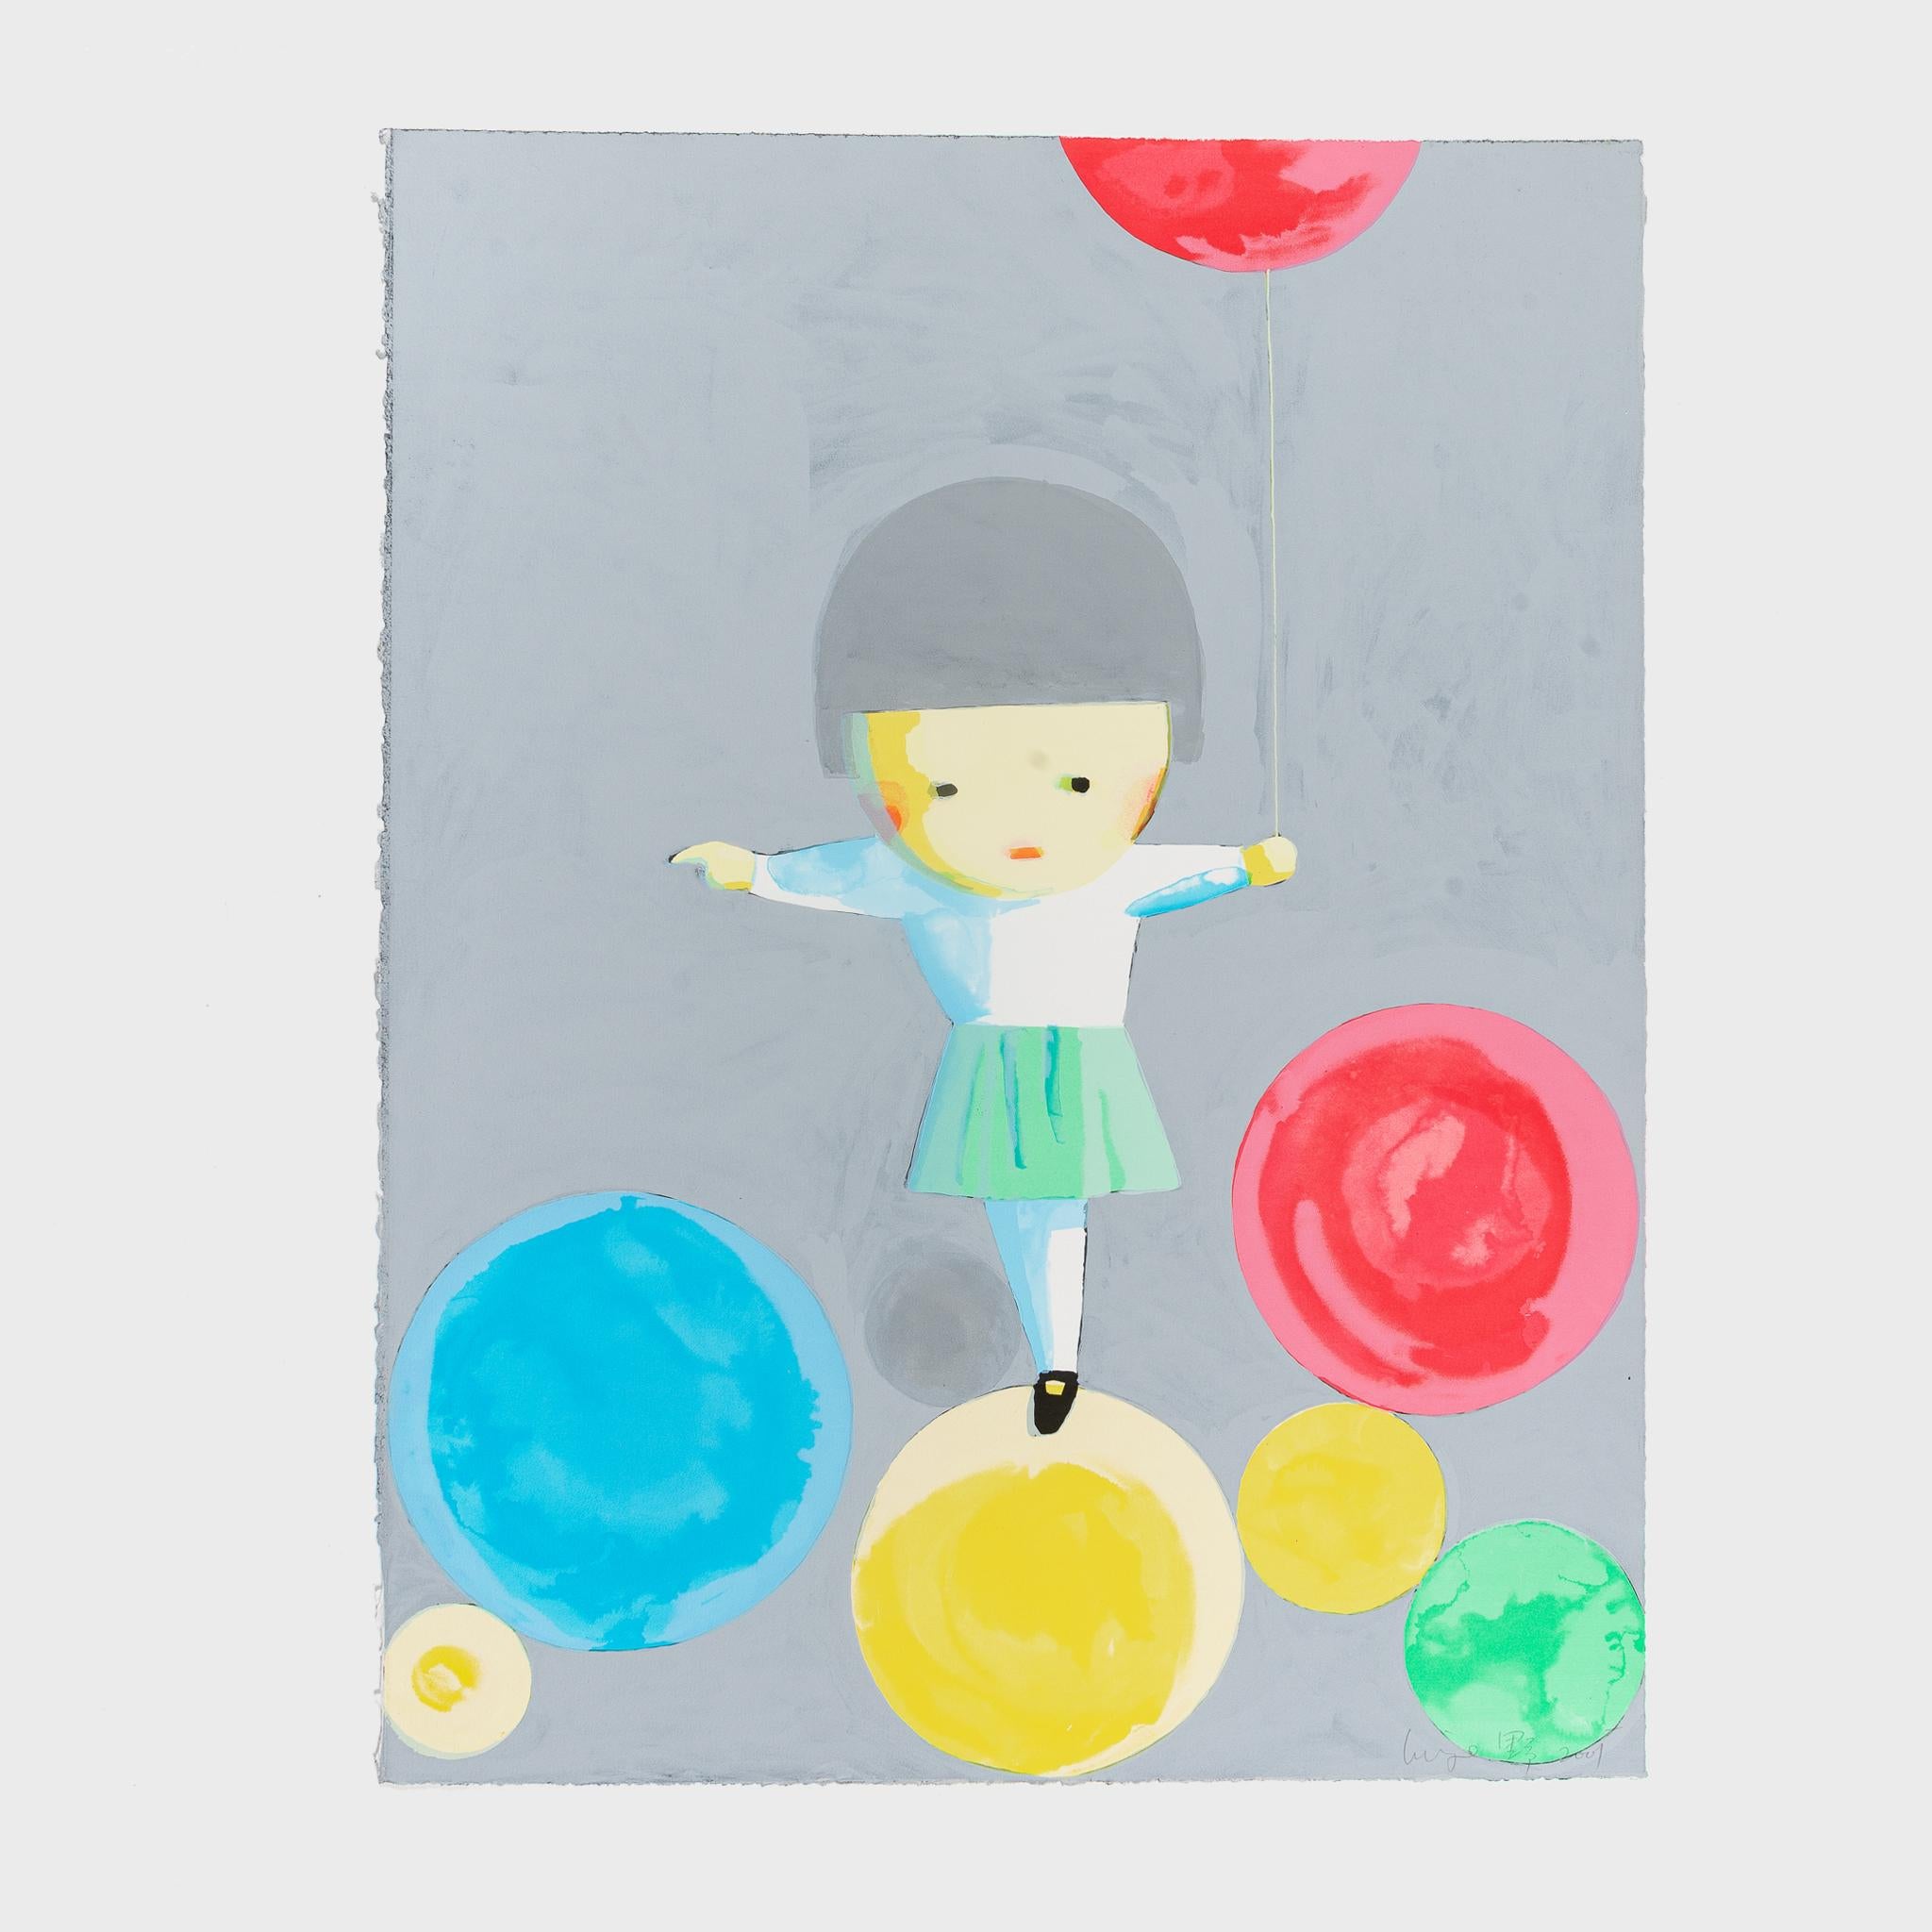 Little Girl With Balloons (petite fille avec ballons)